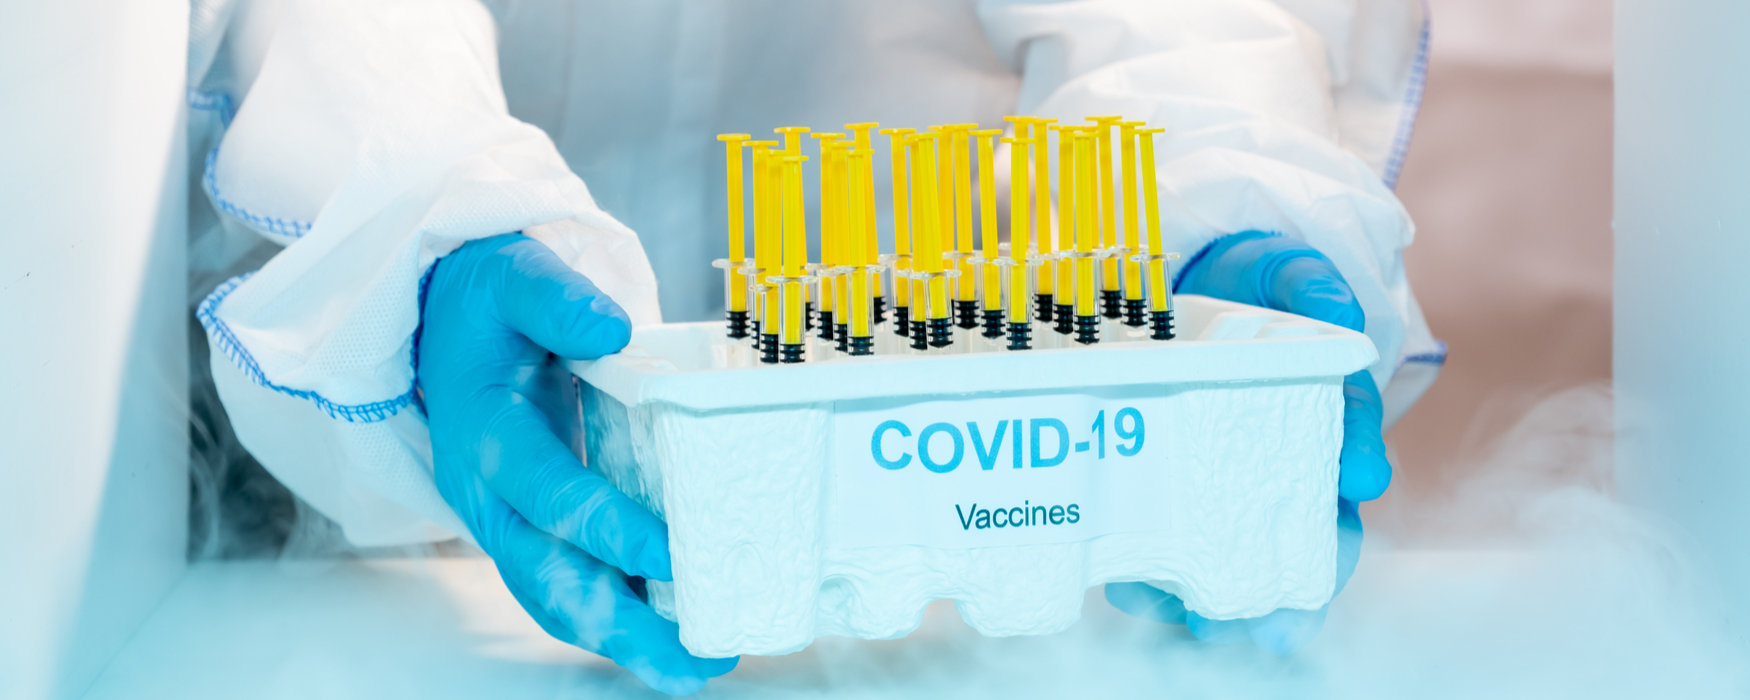 Kansas covid vaccine freezers - covid 19 vaccine freezer - vaccine storage in Kansas